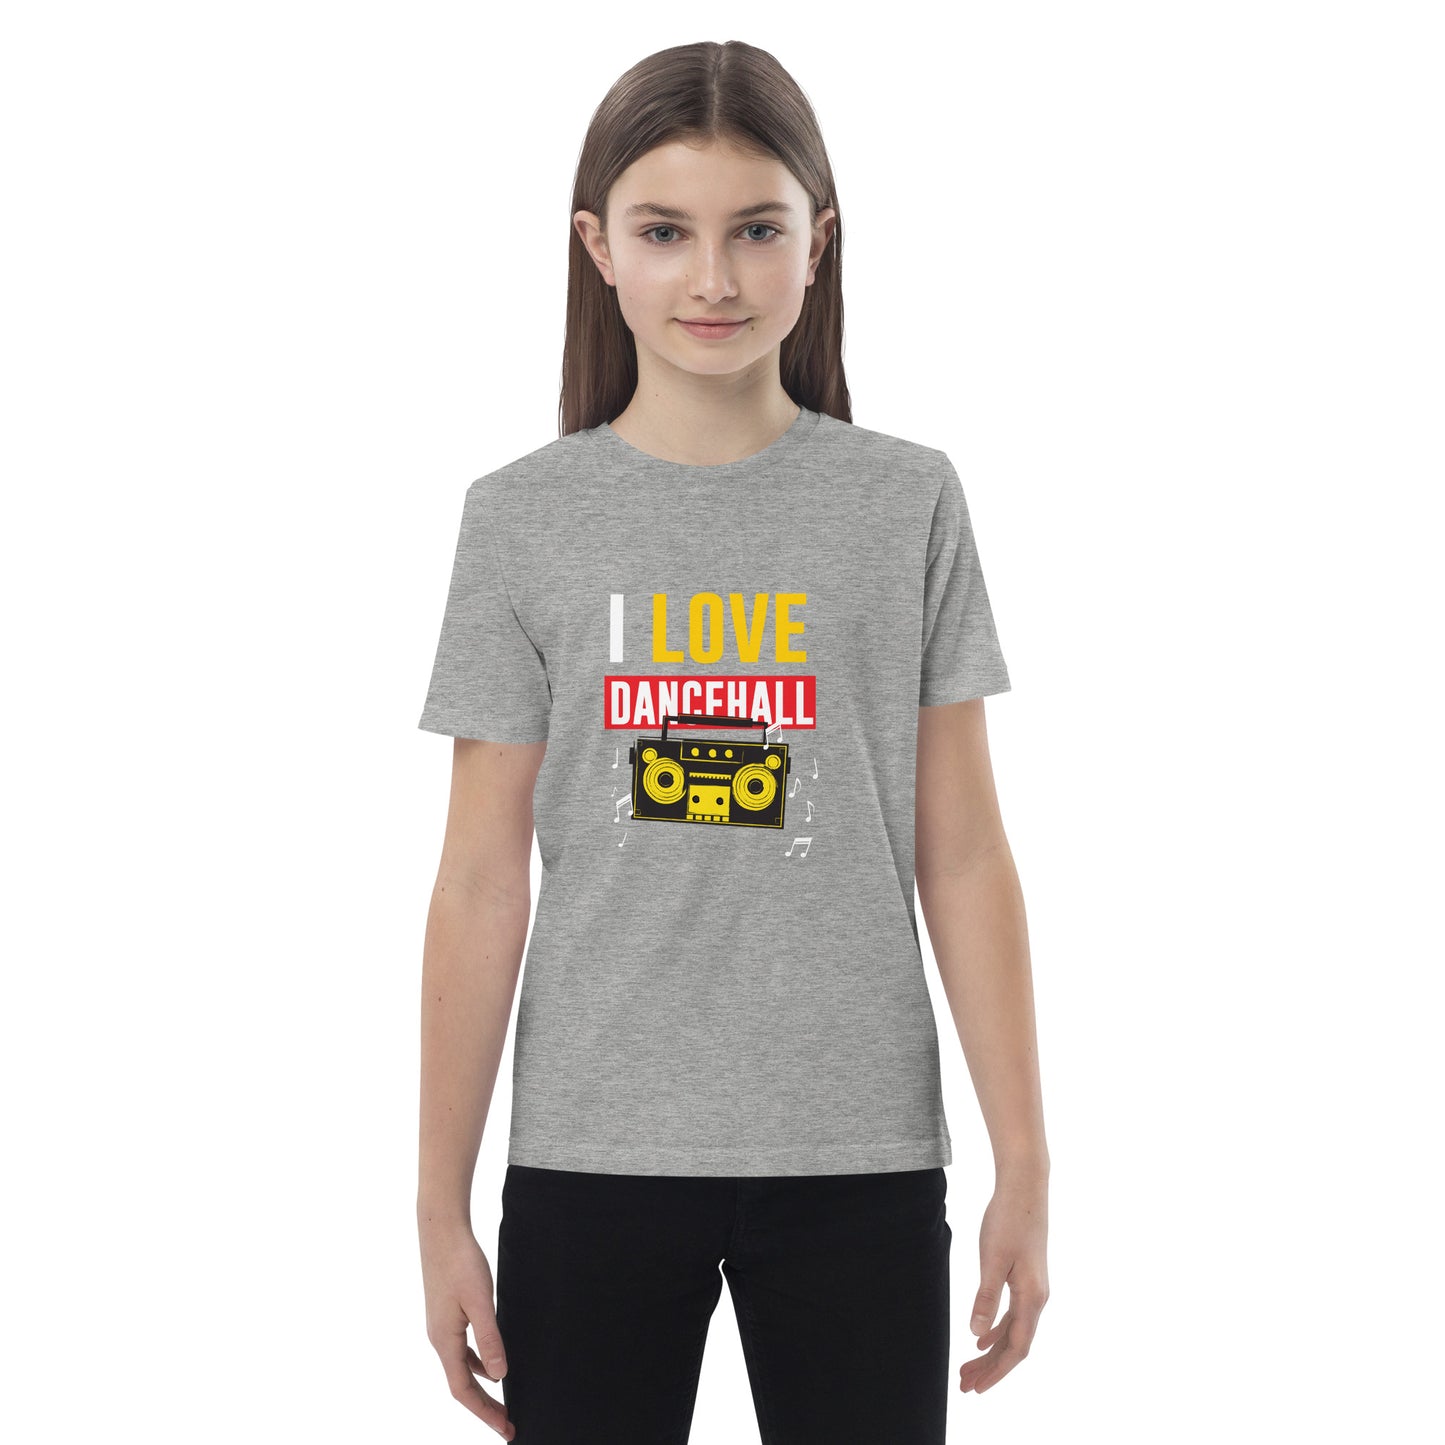 Organic cotton kids "I Love Dancehall" t-shirt